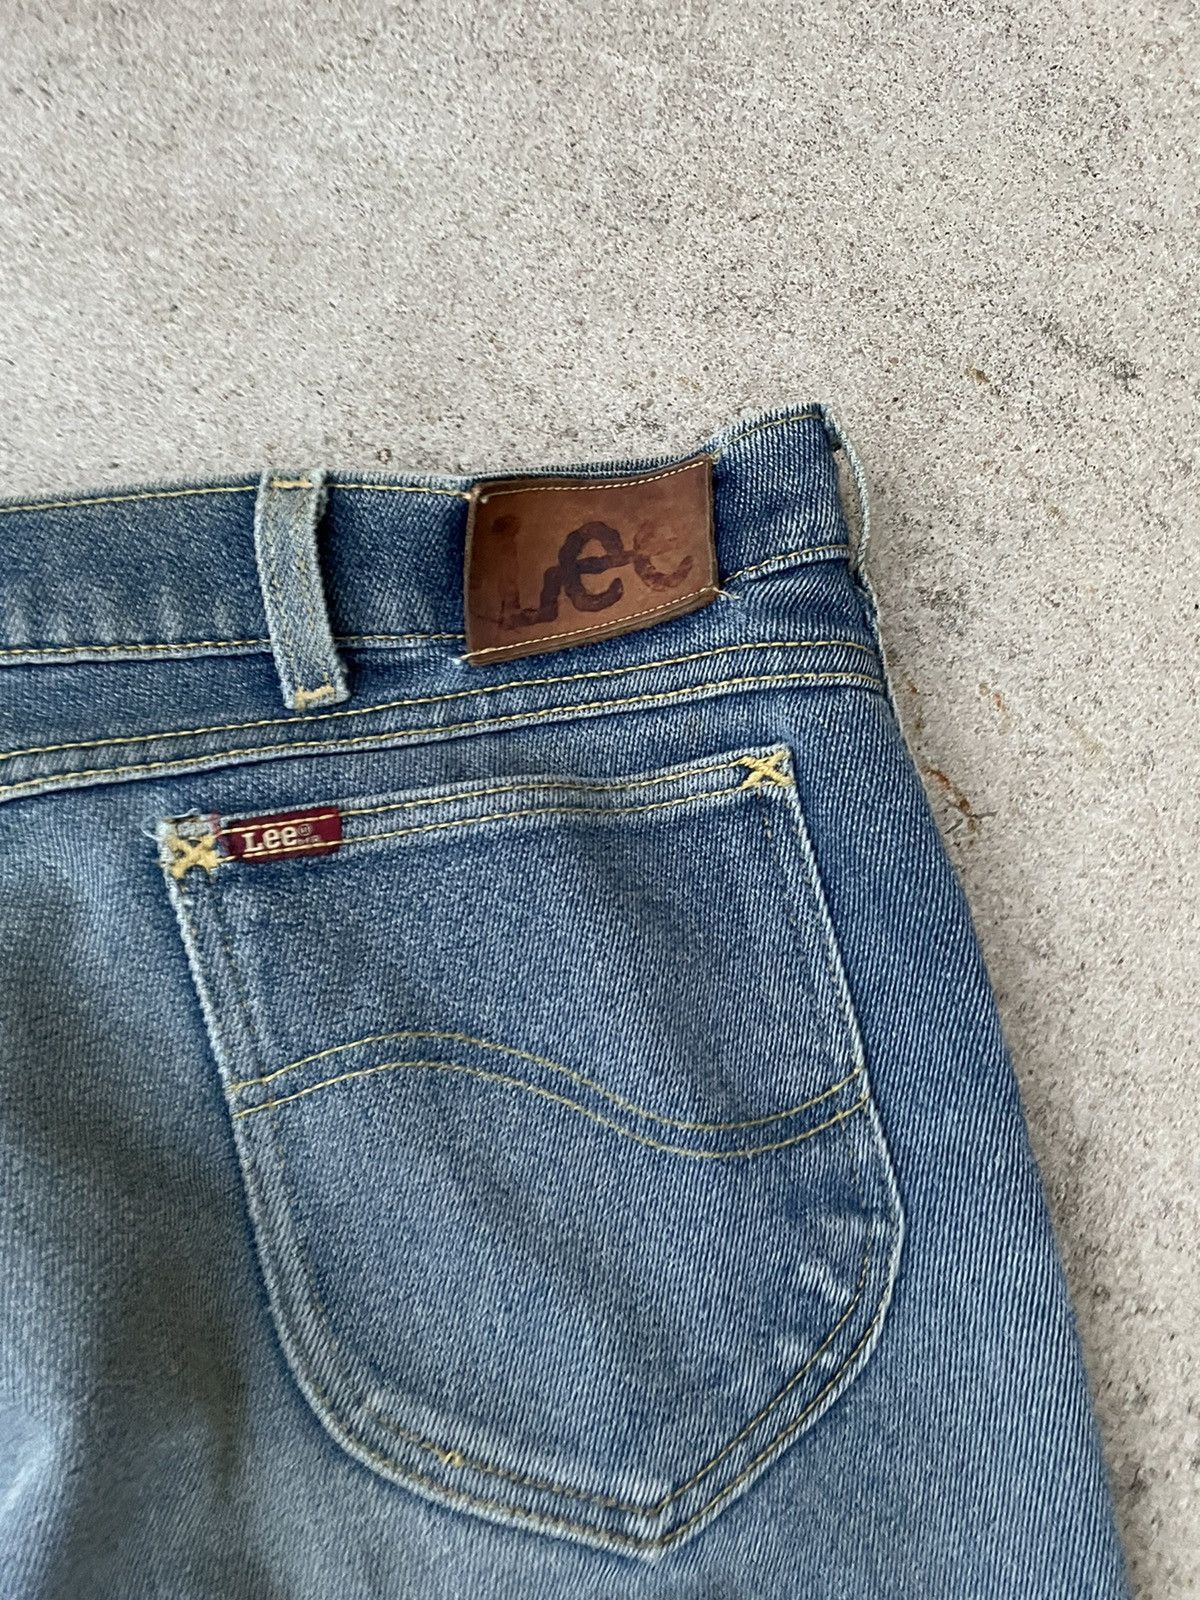 Vintage Vintage 70s Lee Bootcut Distressed Mud Wash Jeans Mens 40x32 Size US 40 / EU 56 - 7 Thumbnail